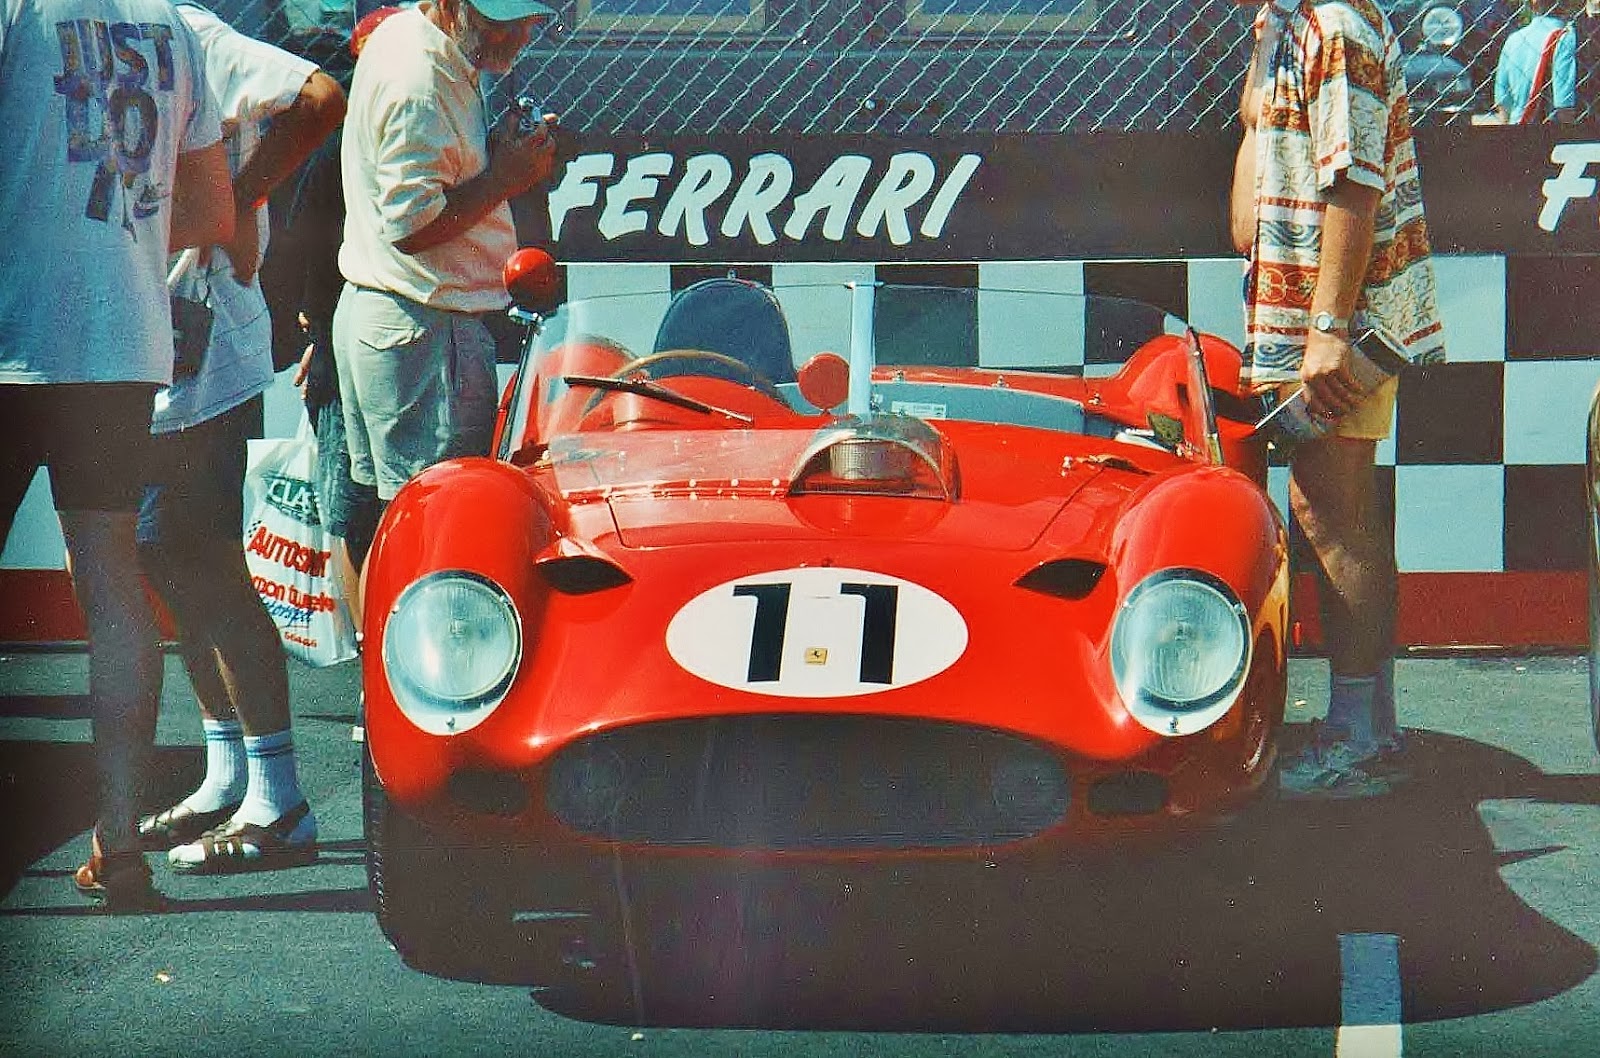 Ferrari Friday 🐎 #Ferrari #Swizzcars #FerrariFriday #PickOne